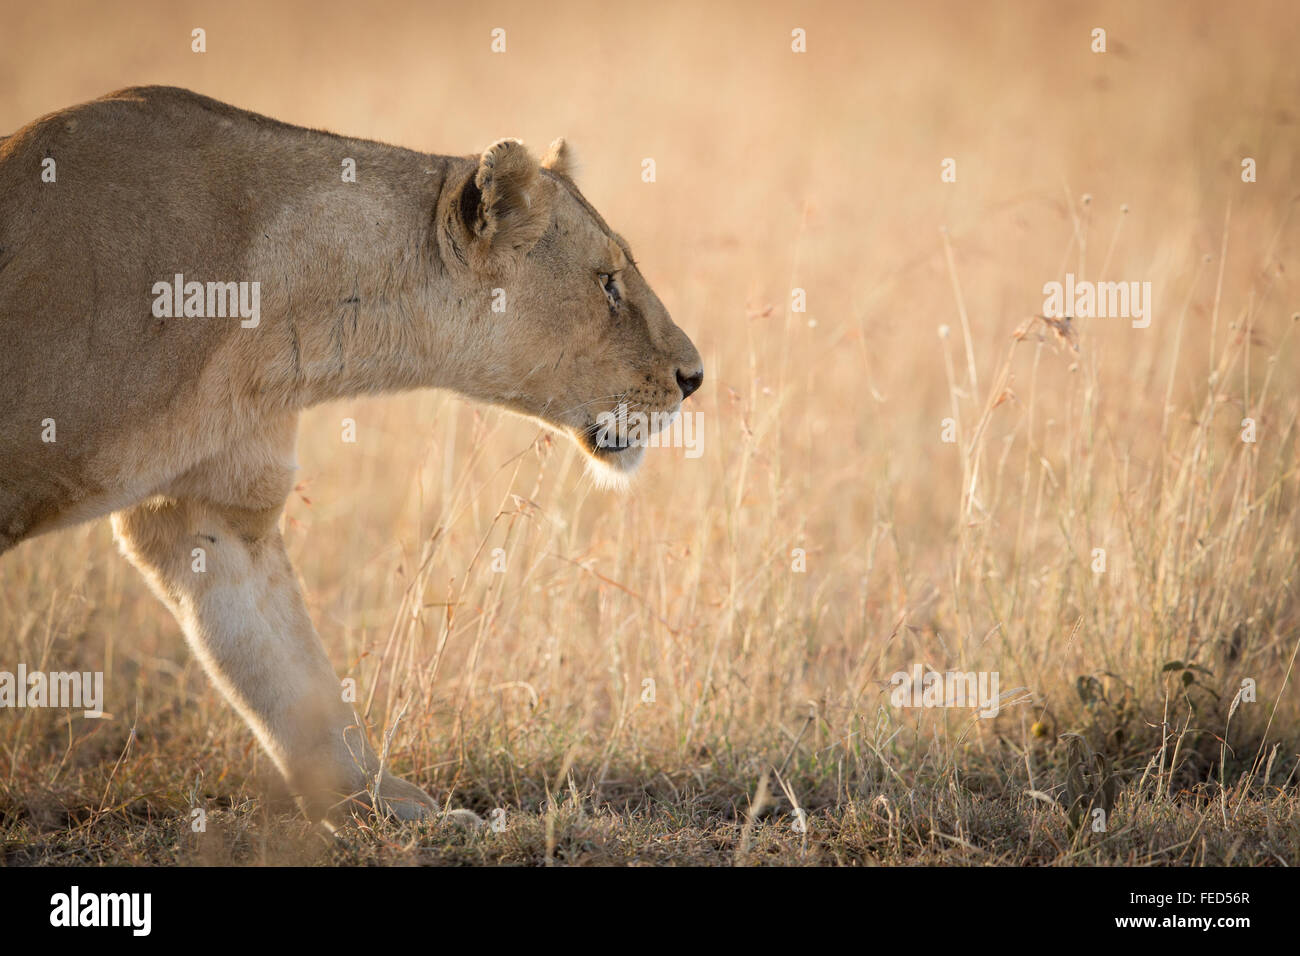 African Lion Serengeti National Park Tanzania Stock Photo